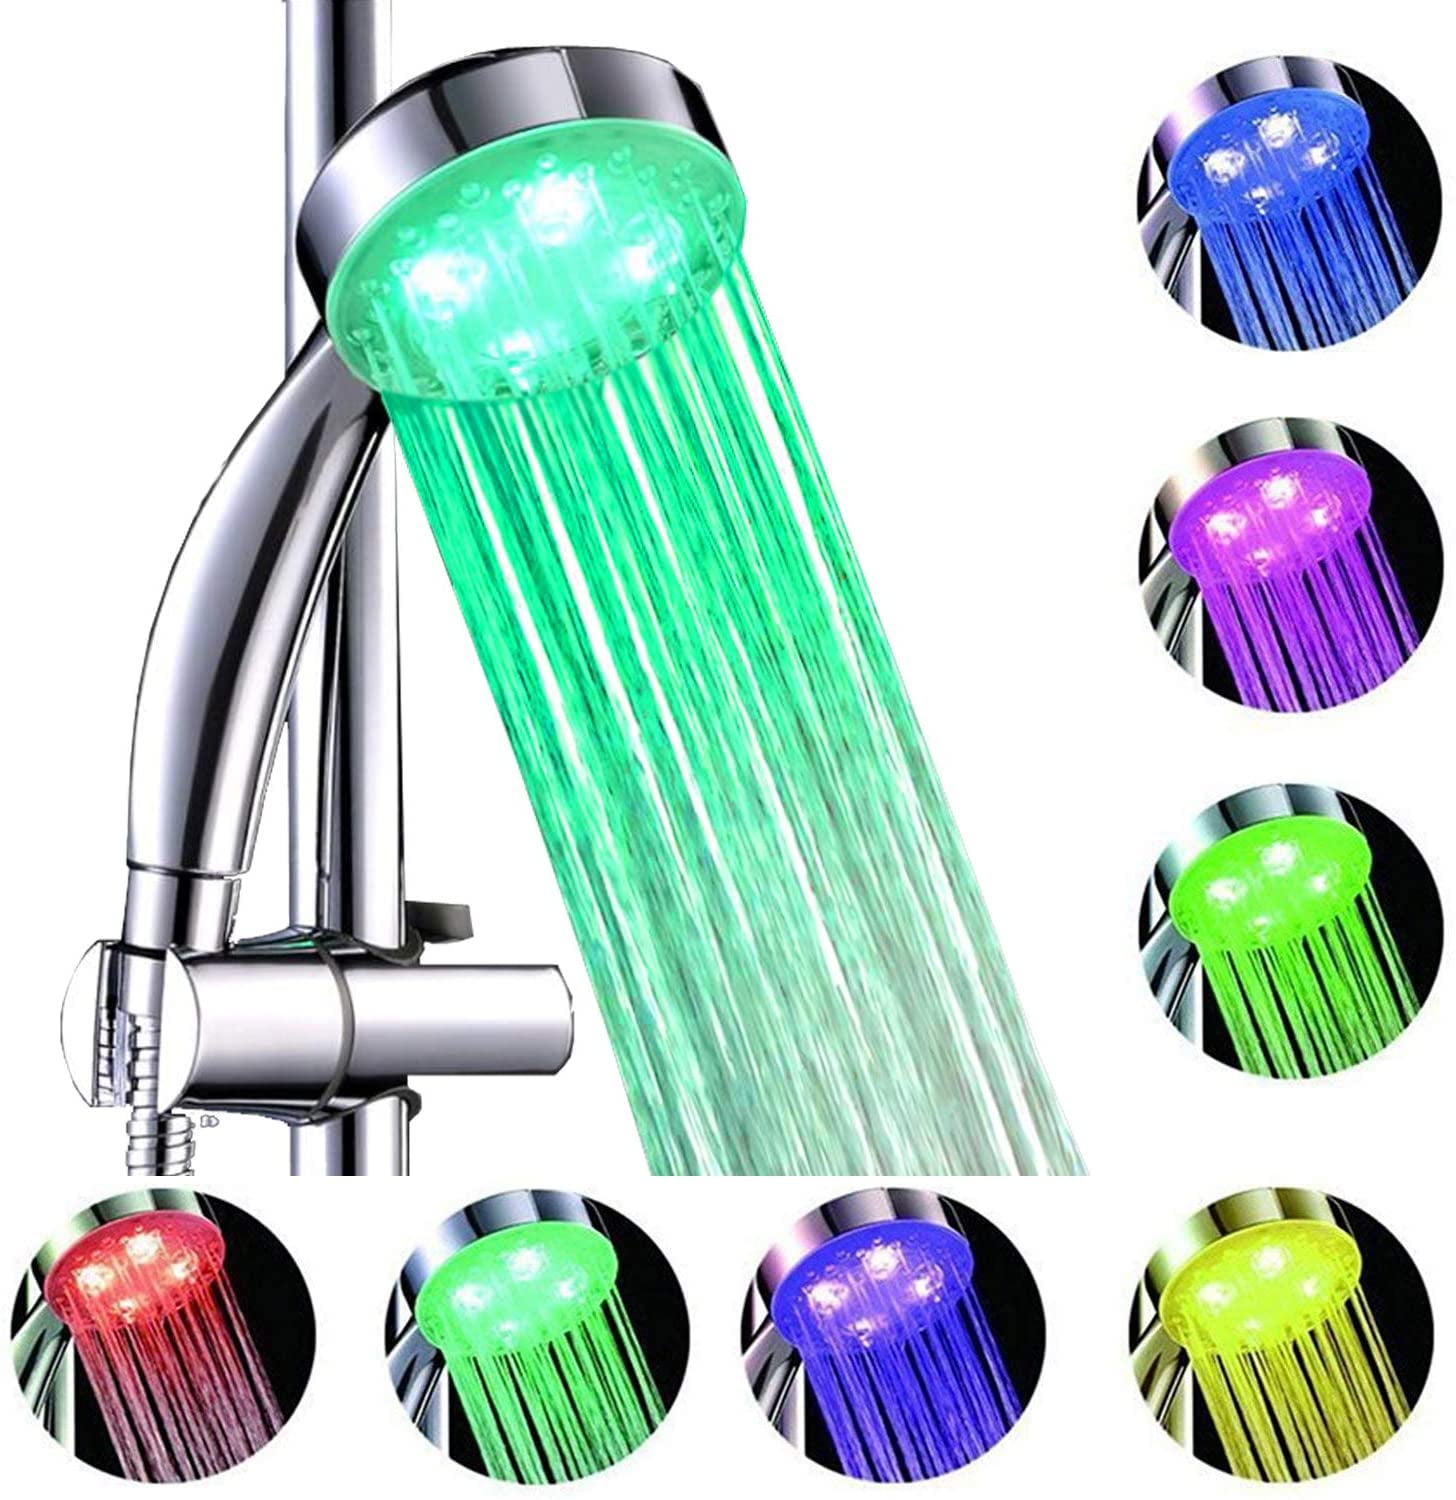 Romantic 7 Color Change LED Light Shower Head Water Bath Home Bathroom Glow Hot 